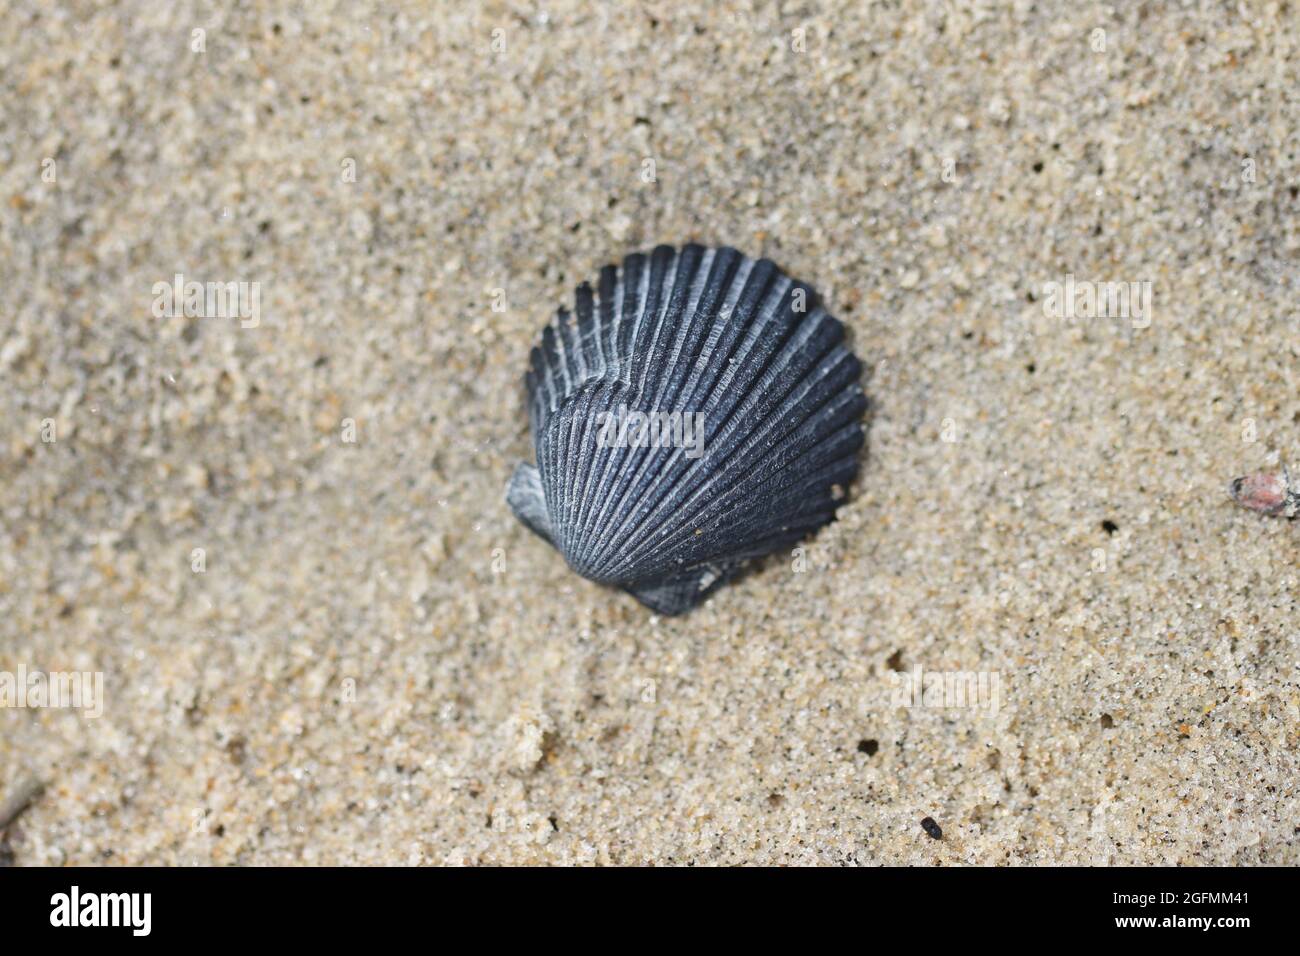 A gray scallop shell (bivalve mollusk) lies on a North Carolina beach on the sand. Stock Photo